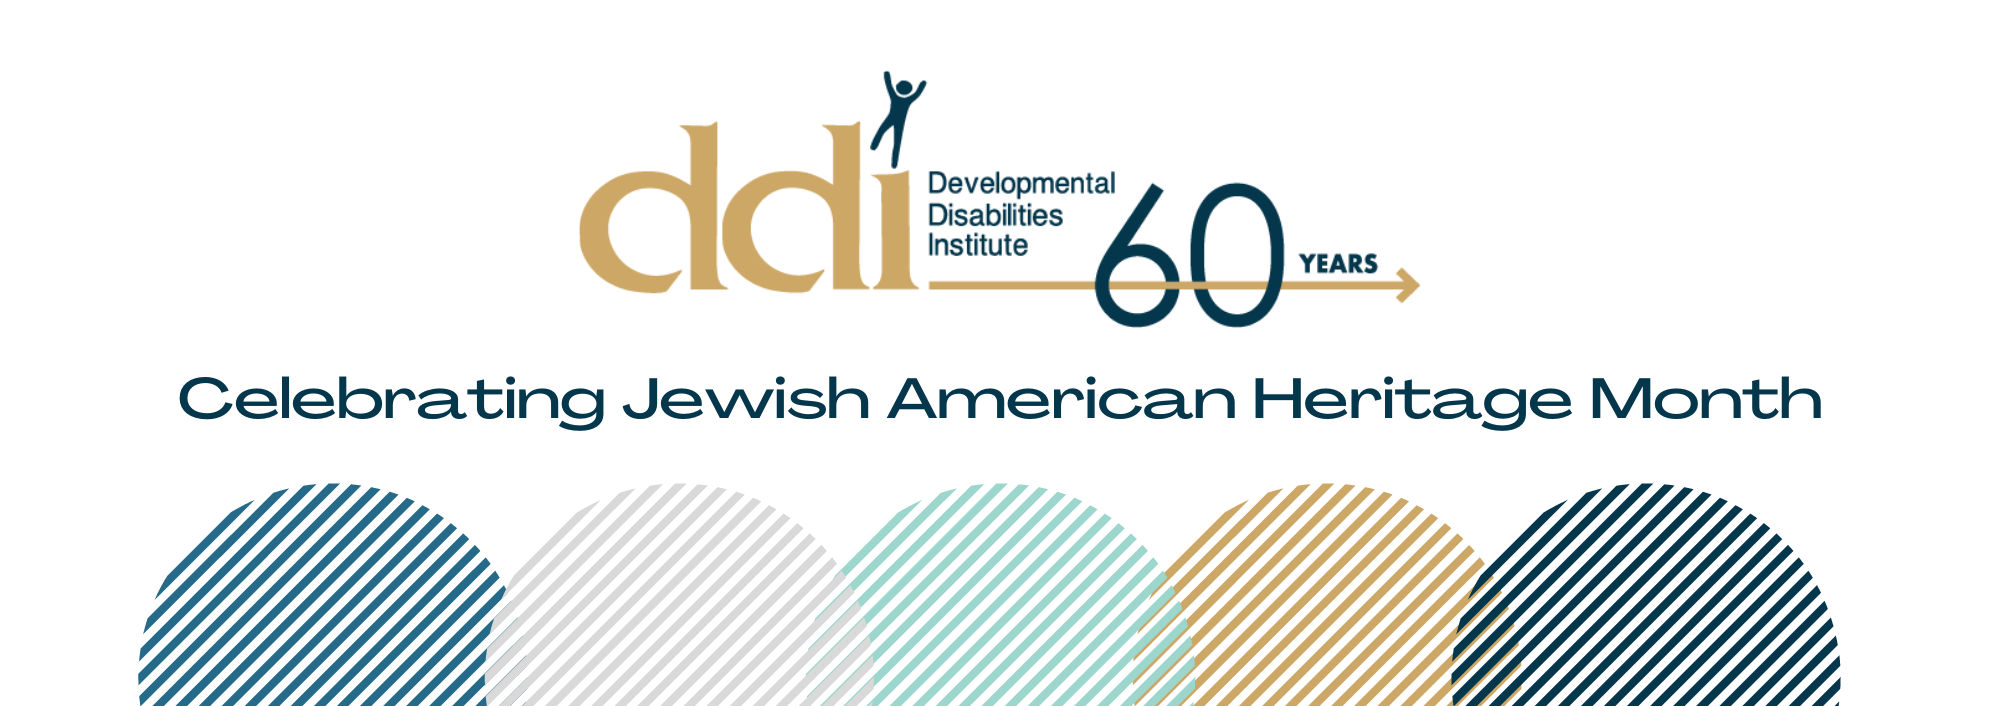 Jewish American Heritage Month Header